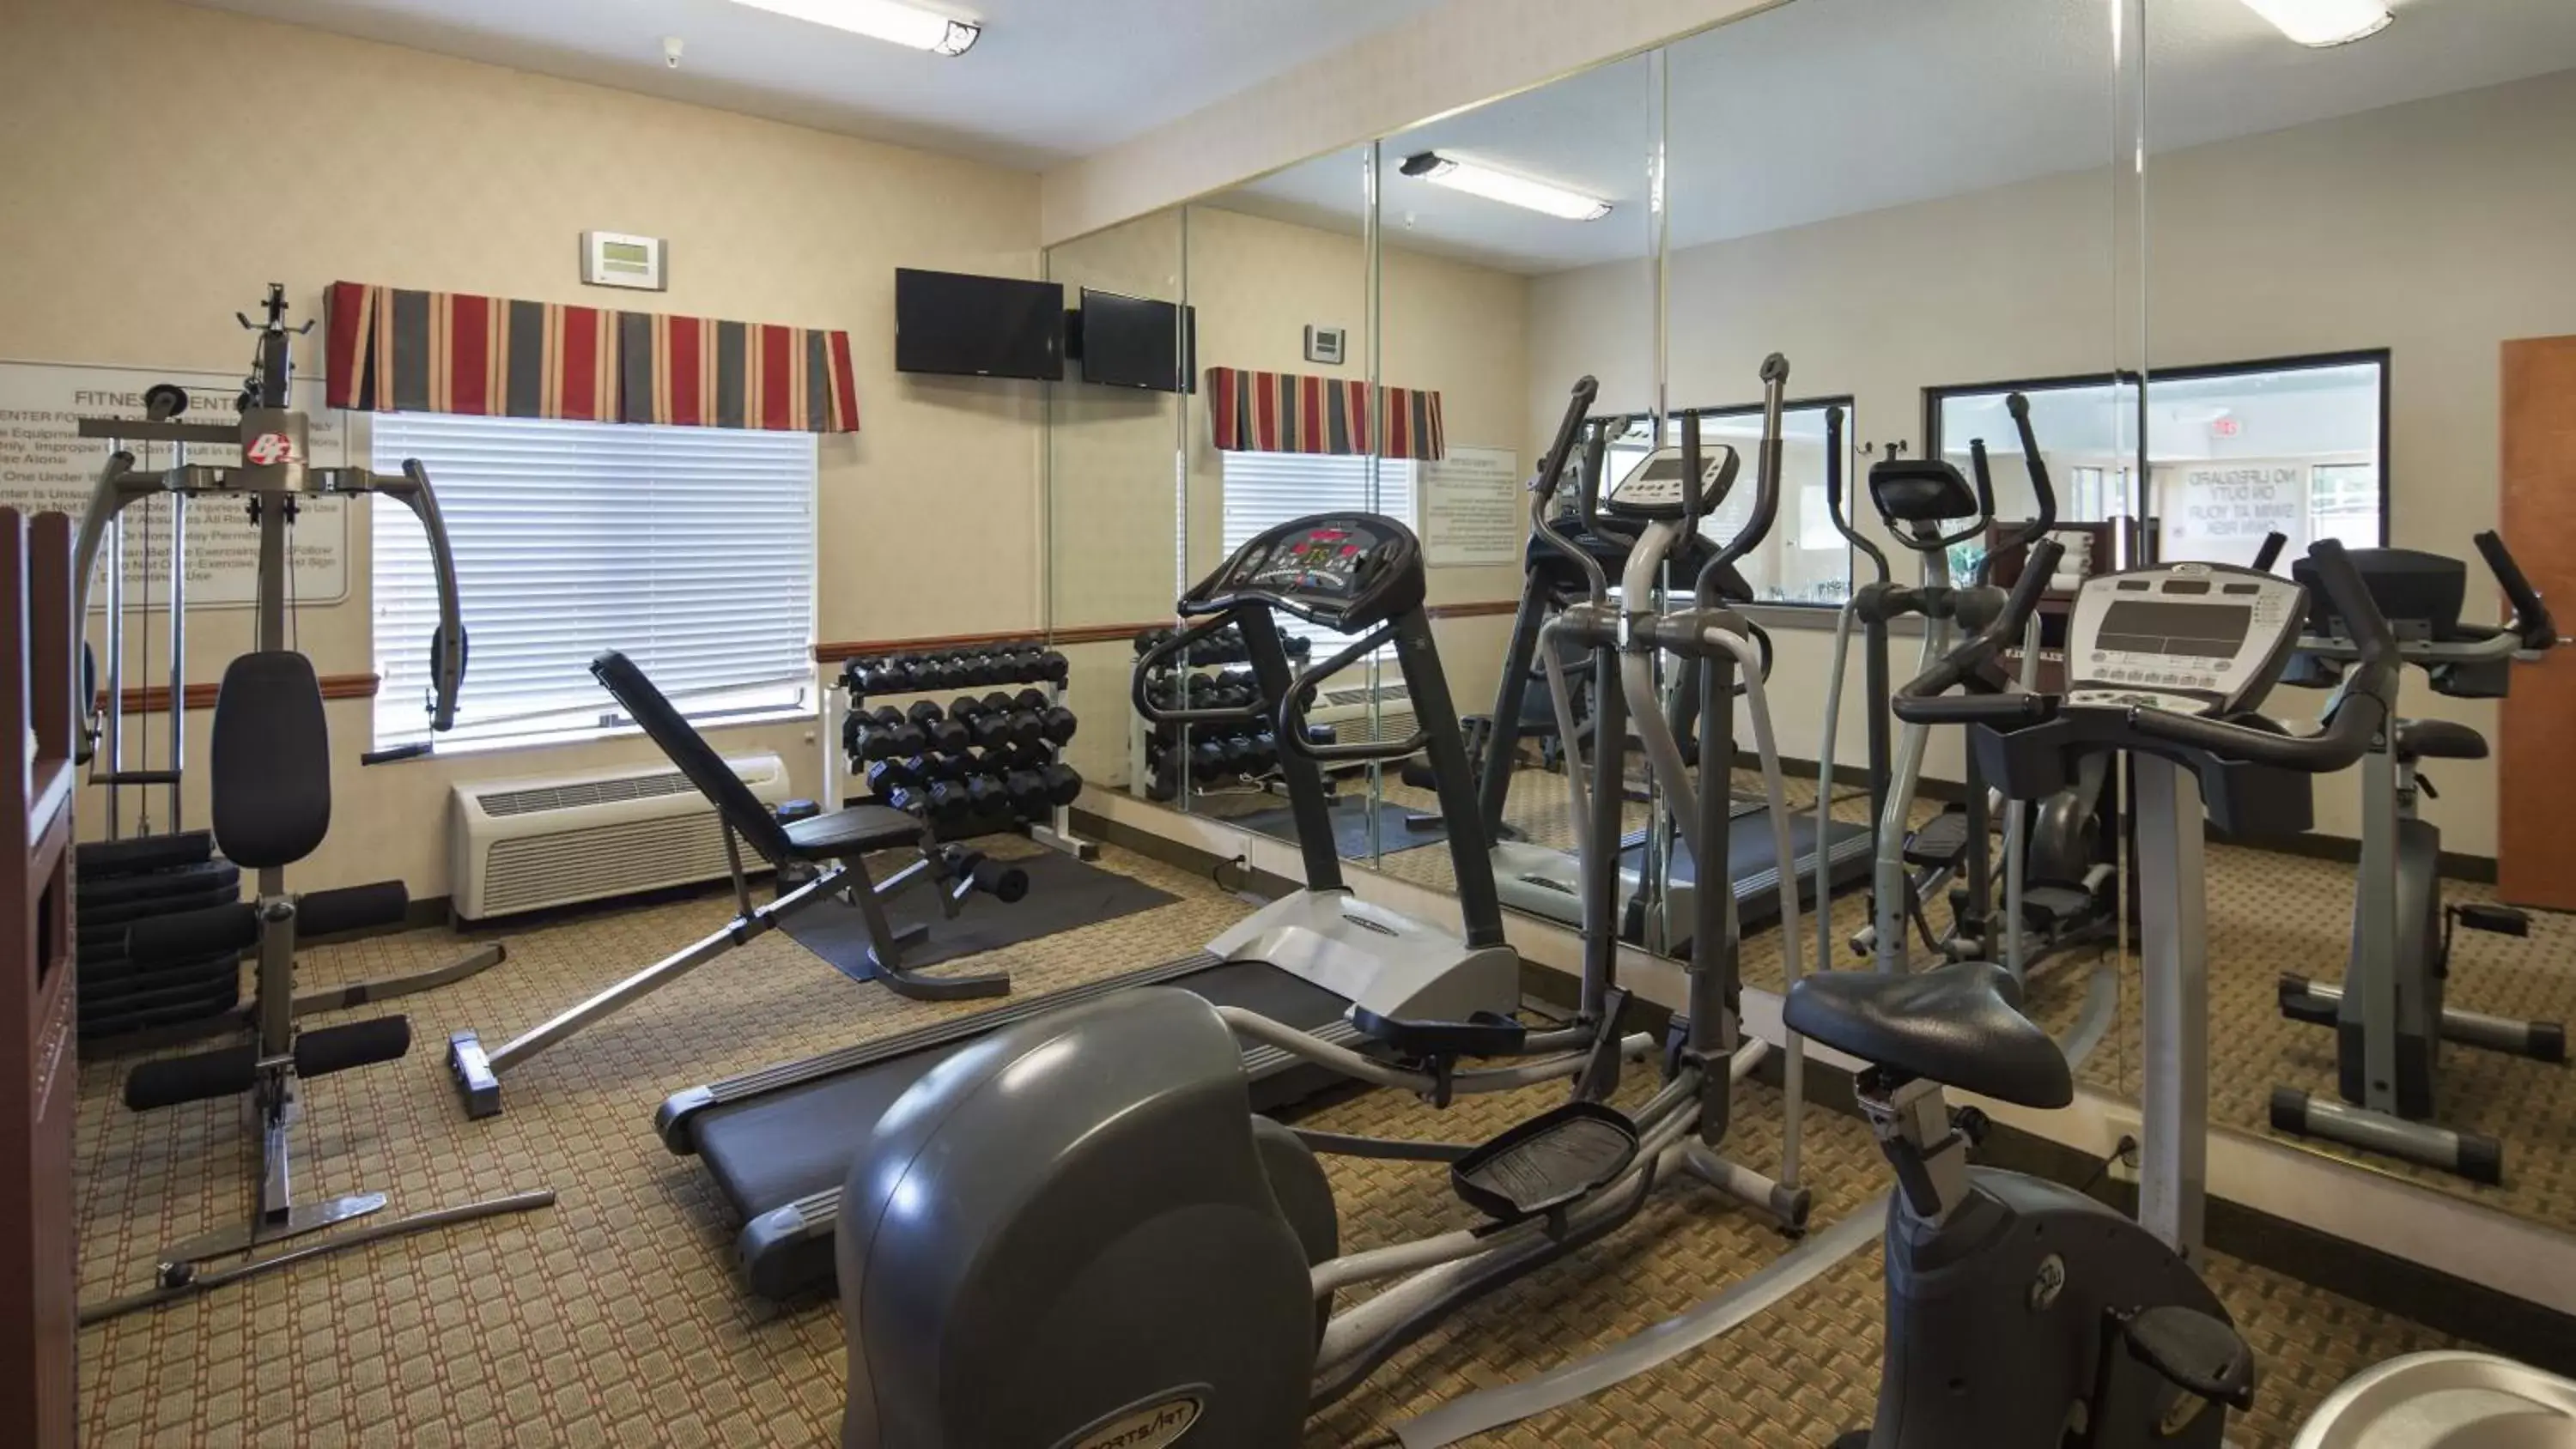 Fitness centre/facilities, Fitness Center/Facilities in Best Western Executive Inn - Latta